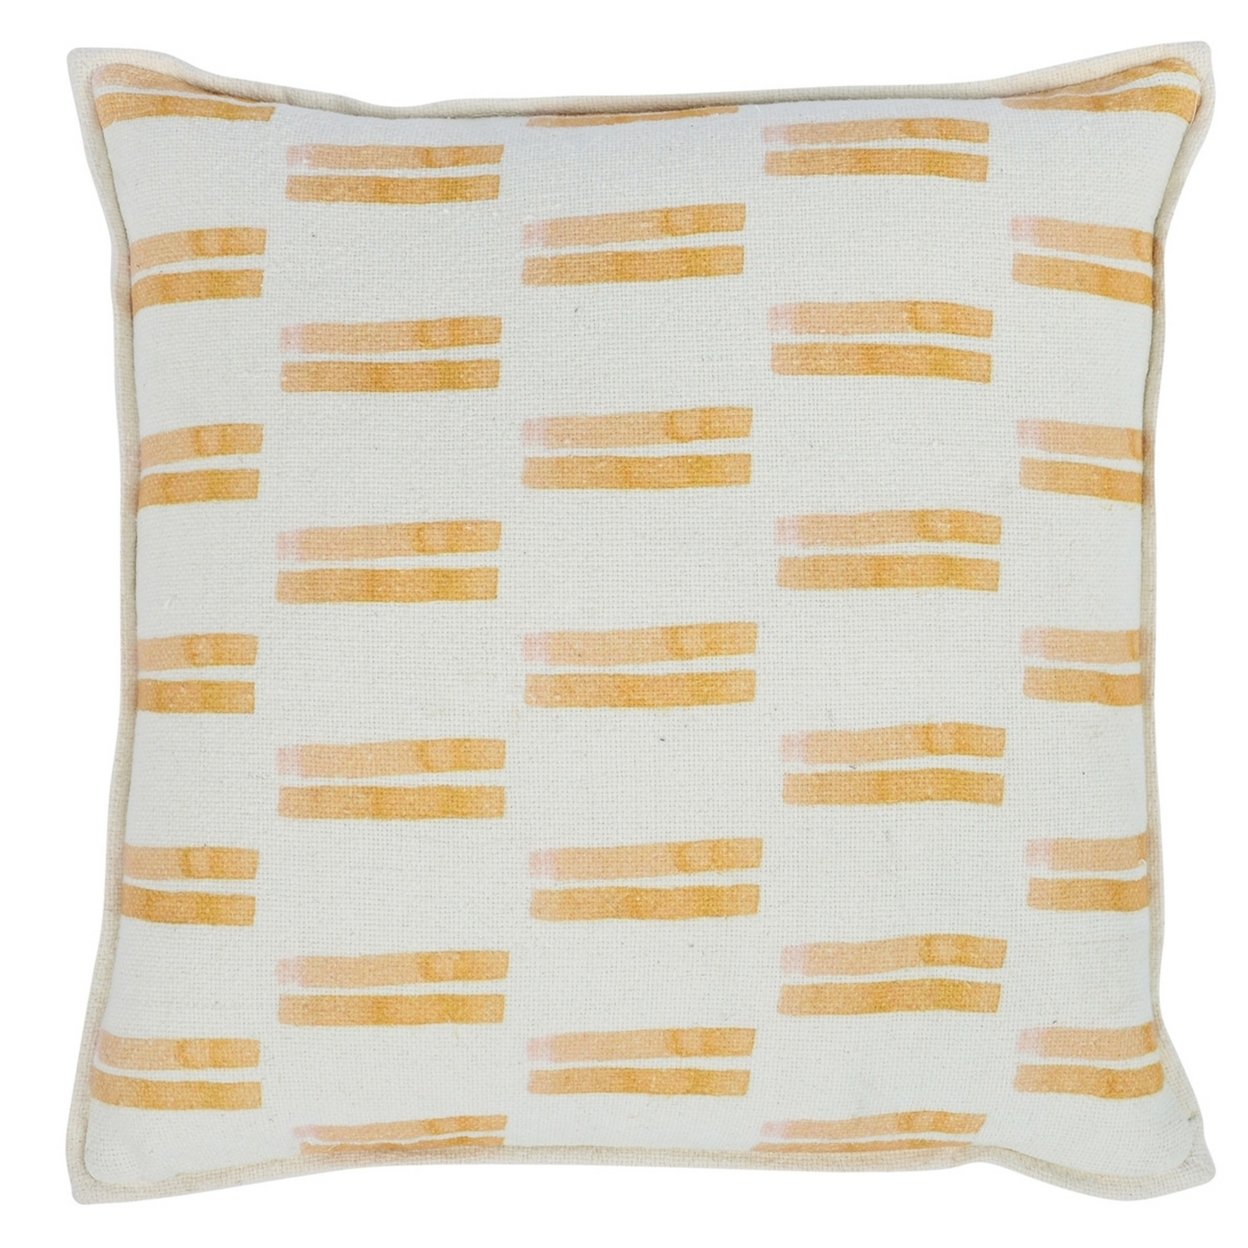 22 Inch Square Linen Accent Throw Pillow, Watercolor Design, Ivory, Orange- Saltoro Sherpi